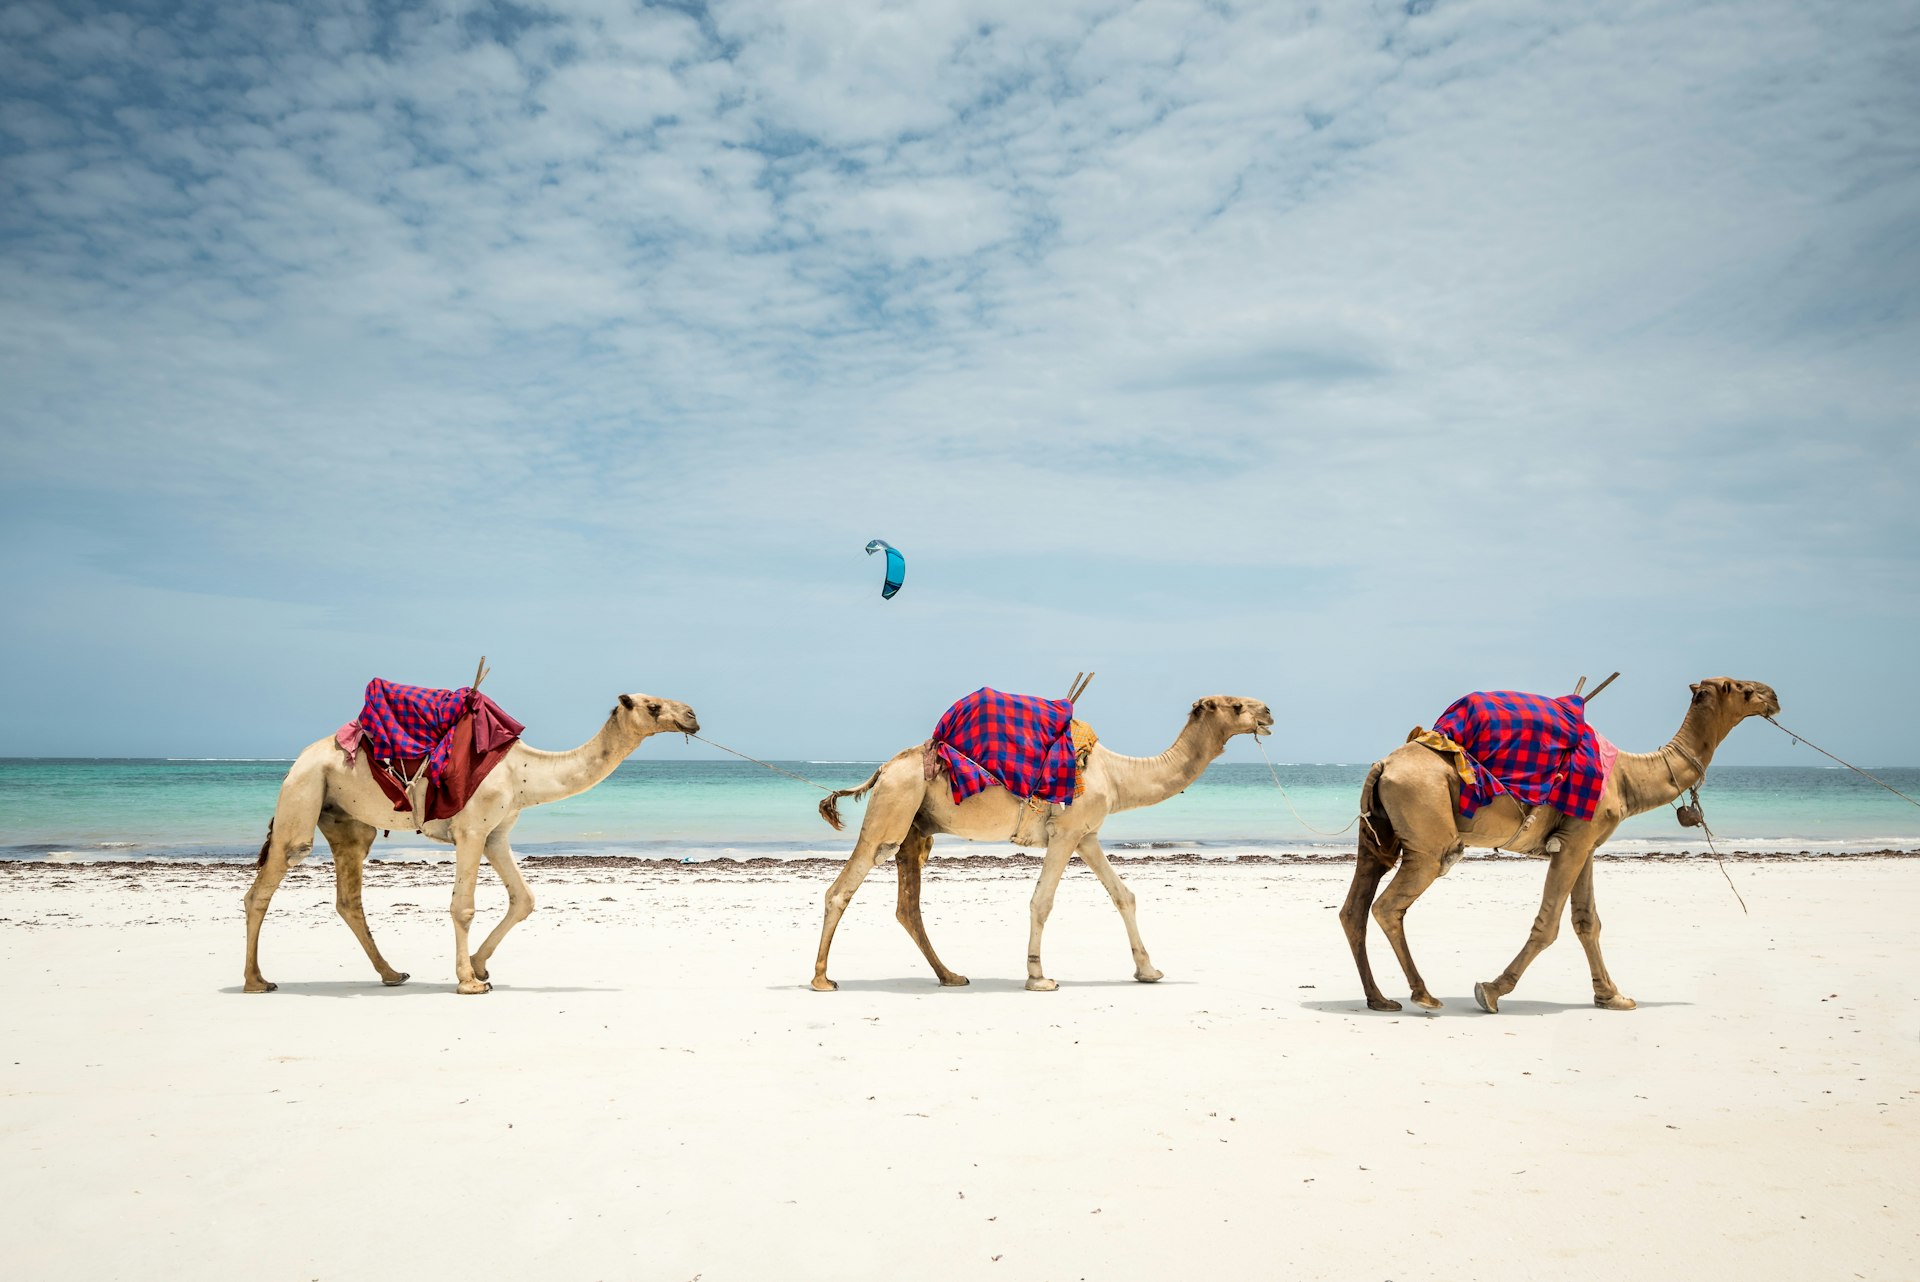 Three camels walking on the beach in Diani Beach, Kenya